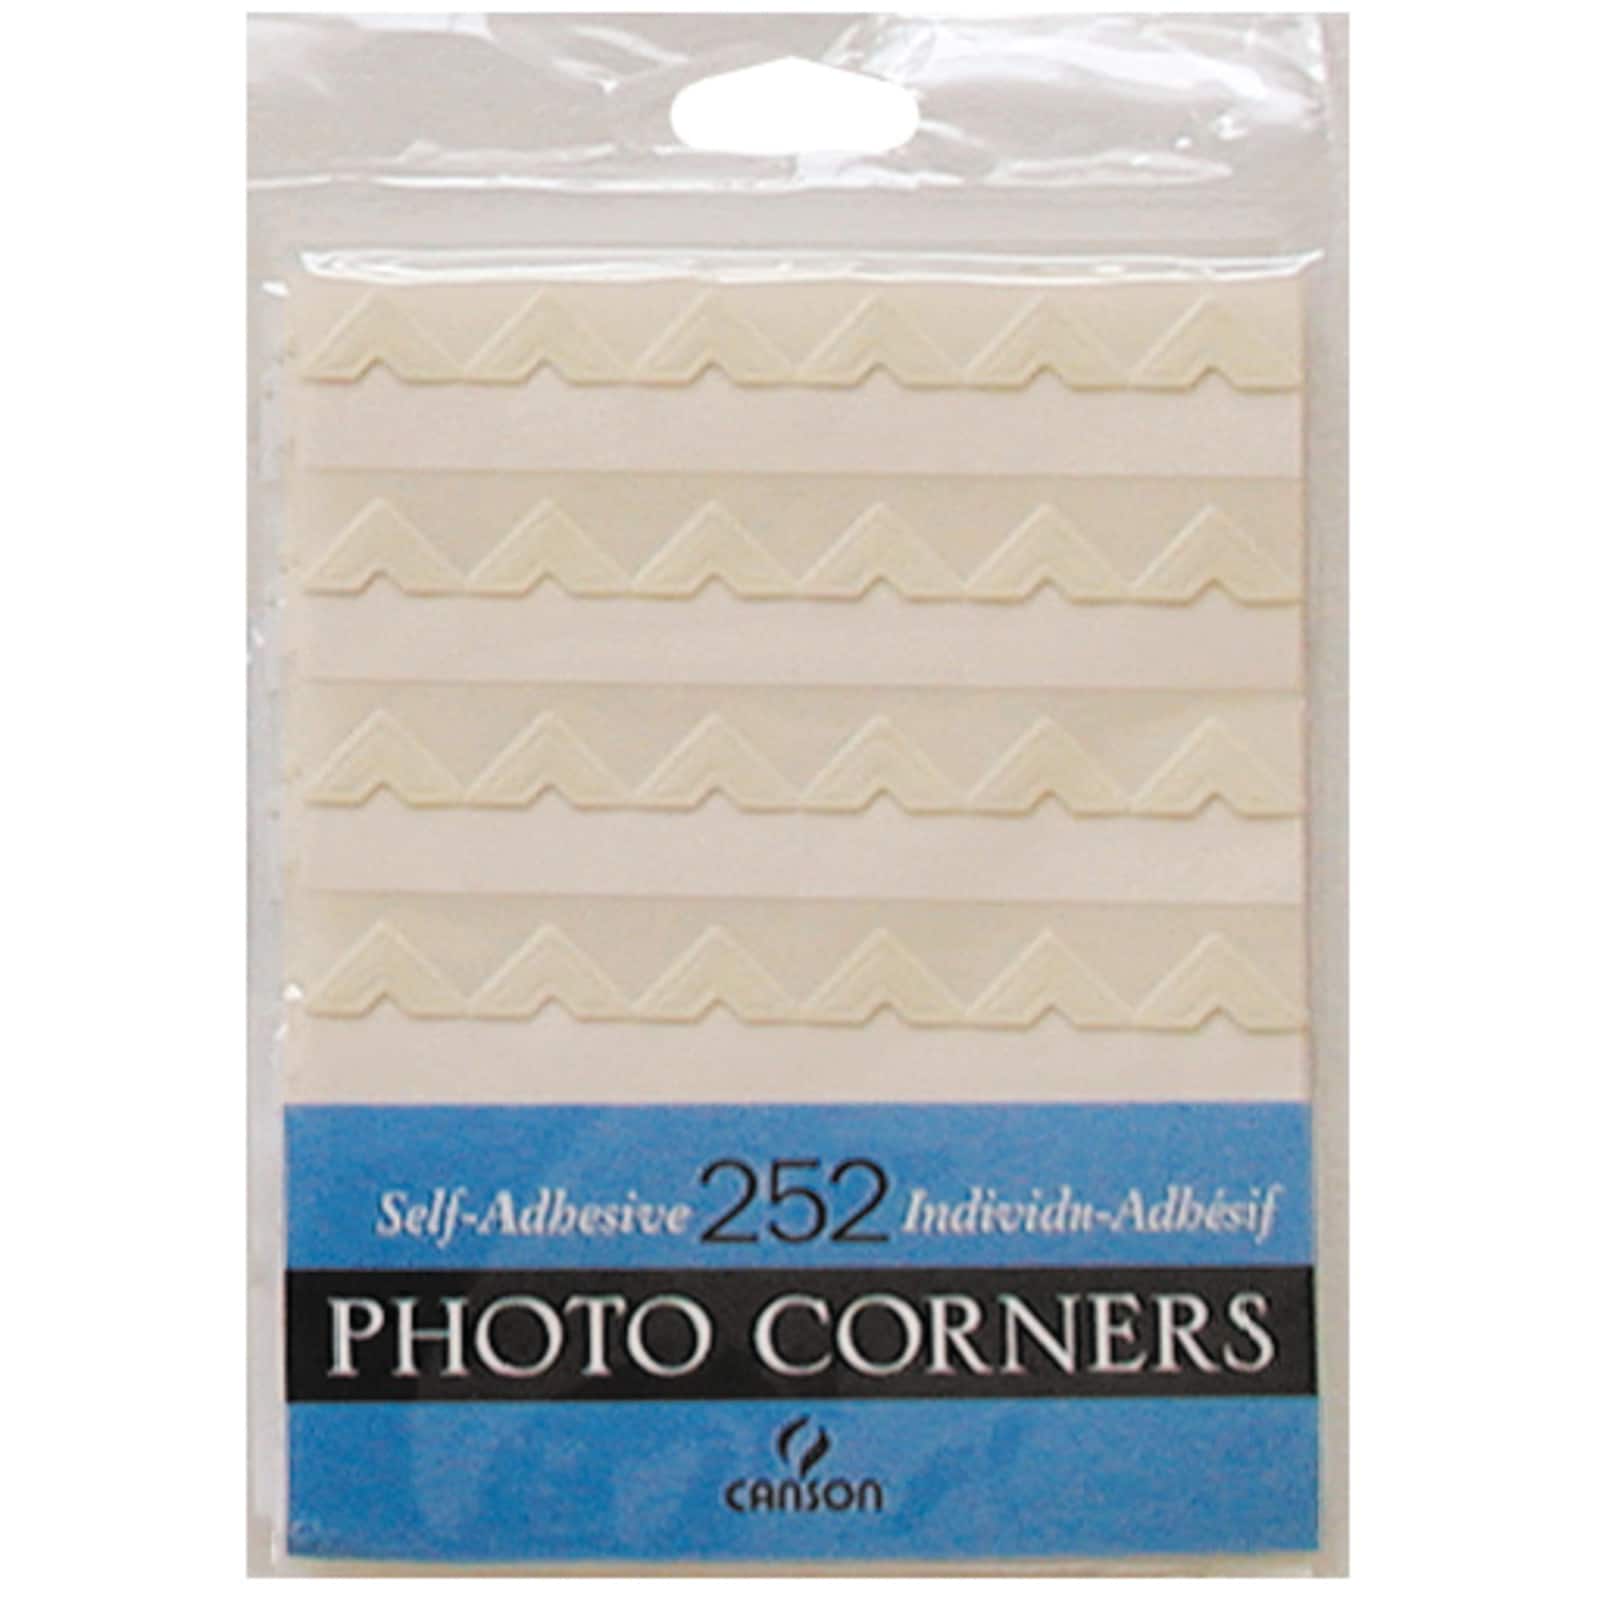 Kraft Photo Corners Self-adhesive Acid-free 252 Ct. 